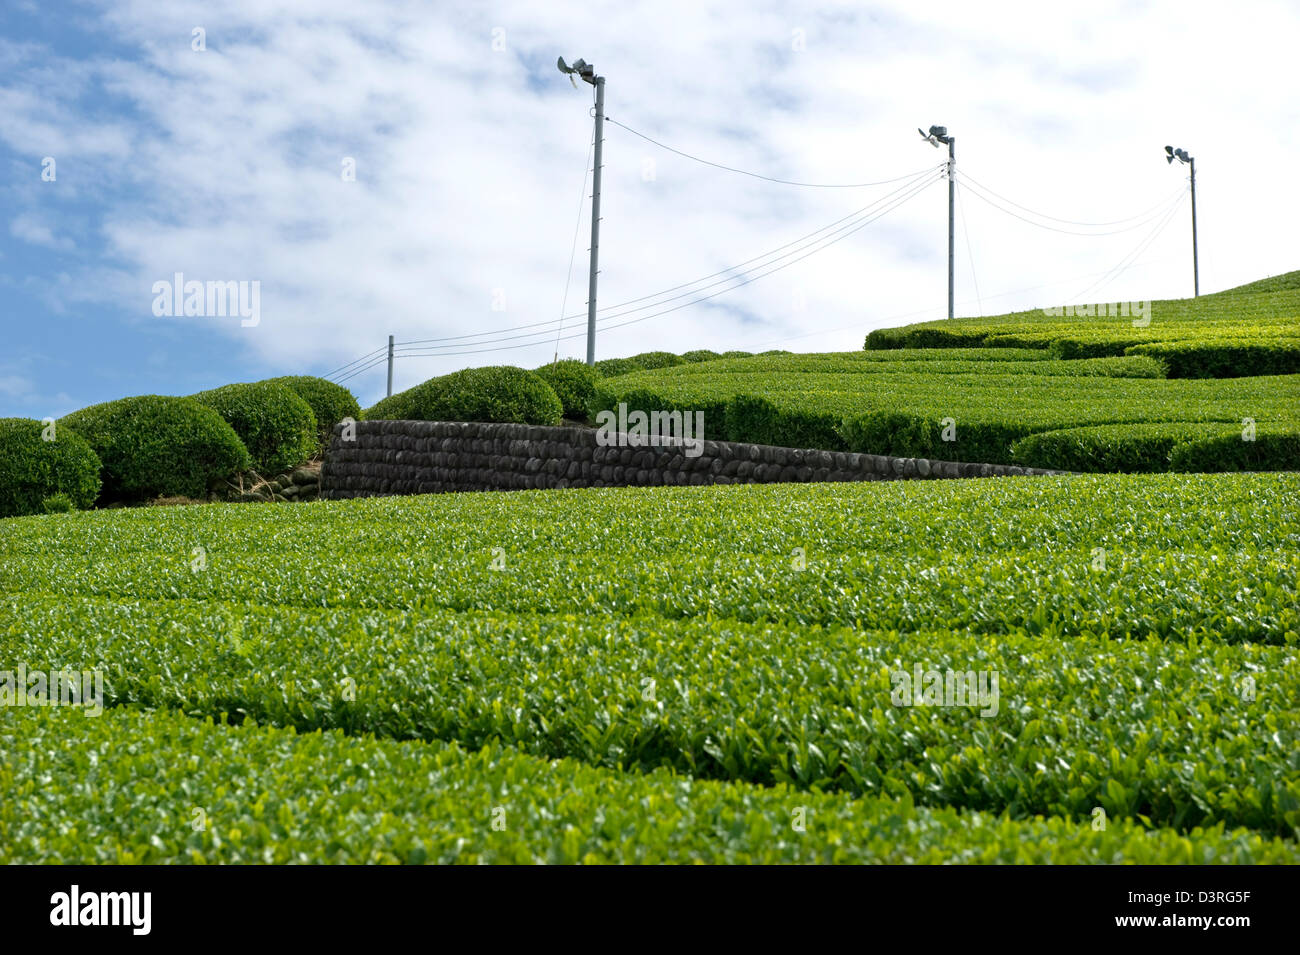 Rows of fresh green tea bushes growing at a plantation in the Makinohara chabatake tea fields of Shizuoka Prefecture, Japan. Stock Photo